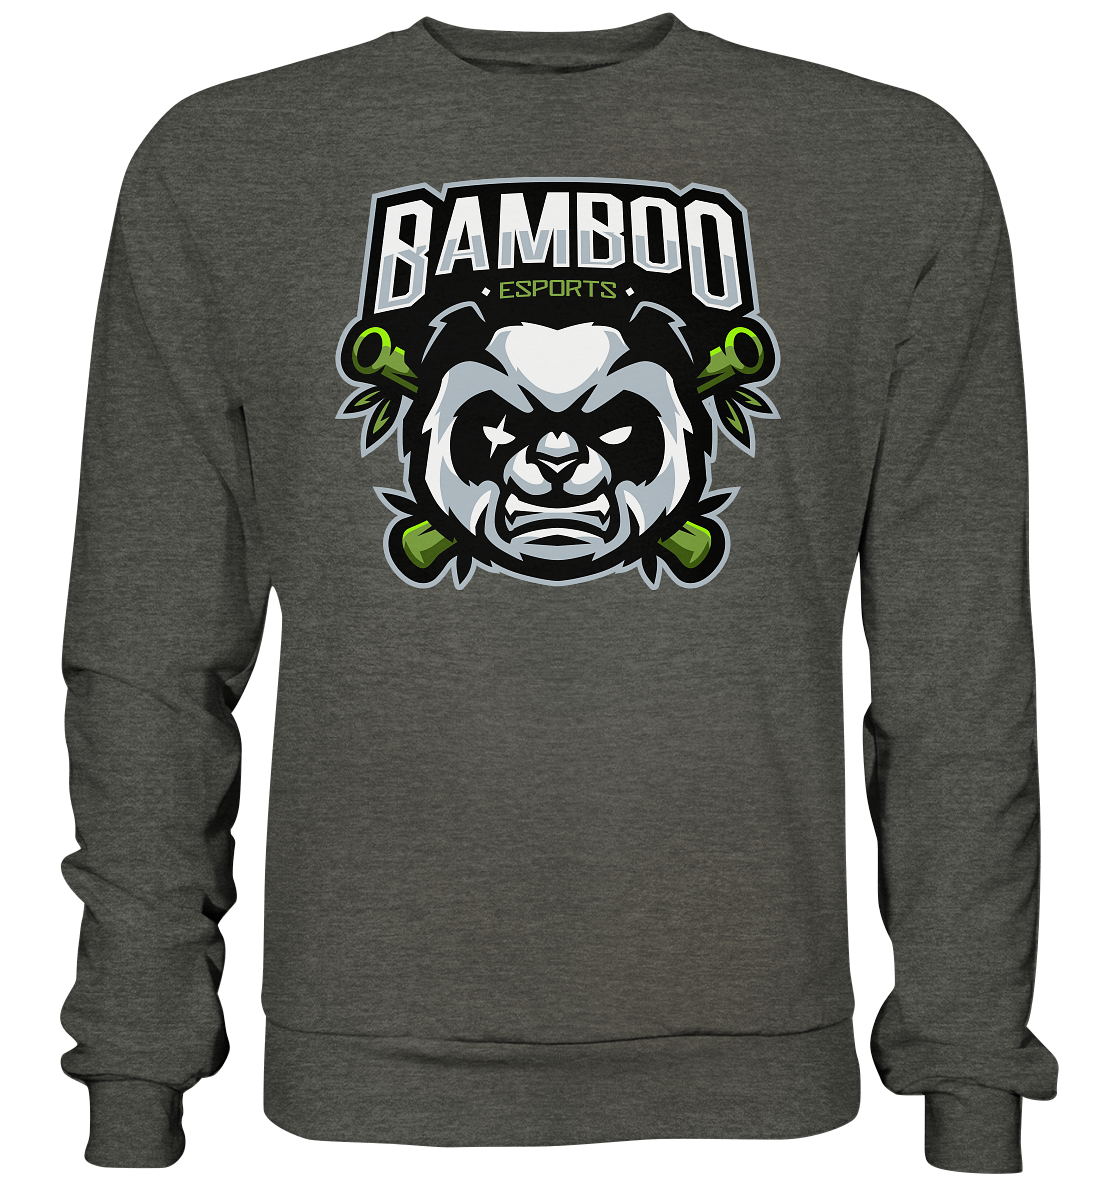 BAMBOO ESPORTS - Basic Sweatshirt